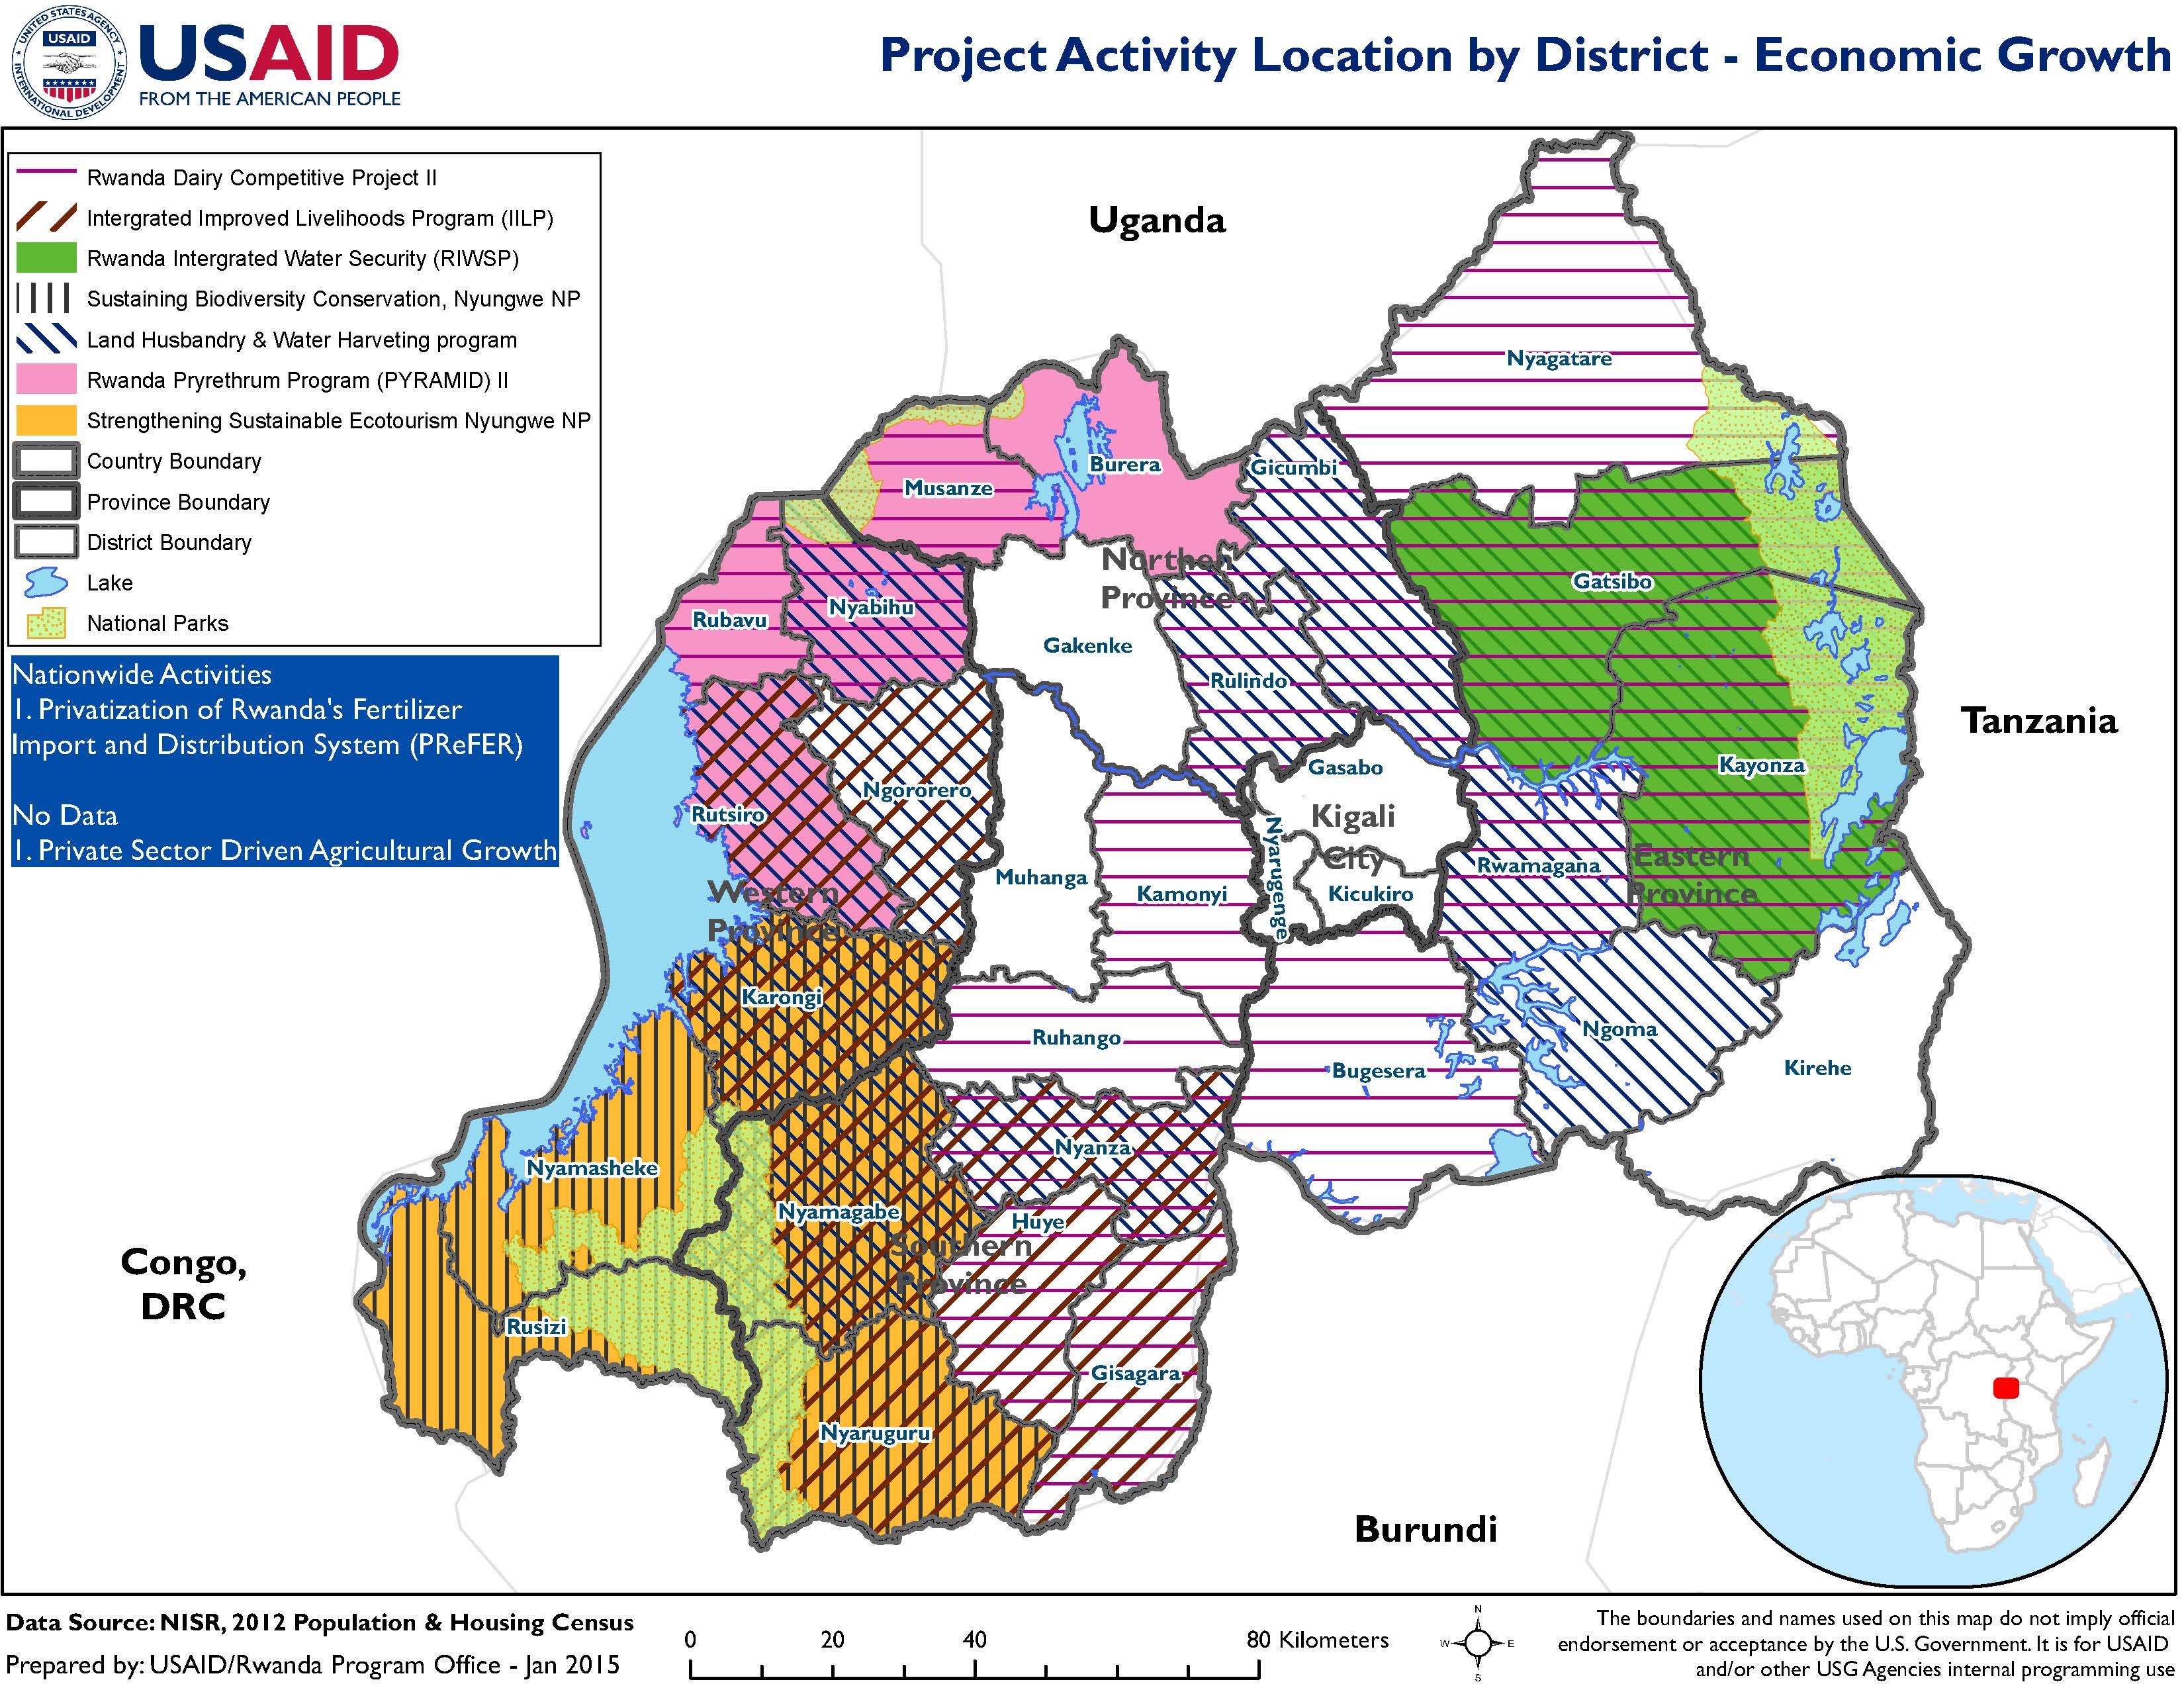 FY 2014 USAID/Rwanda's Economic Growth Progam Locations by District